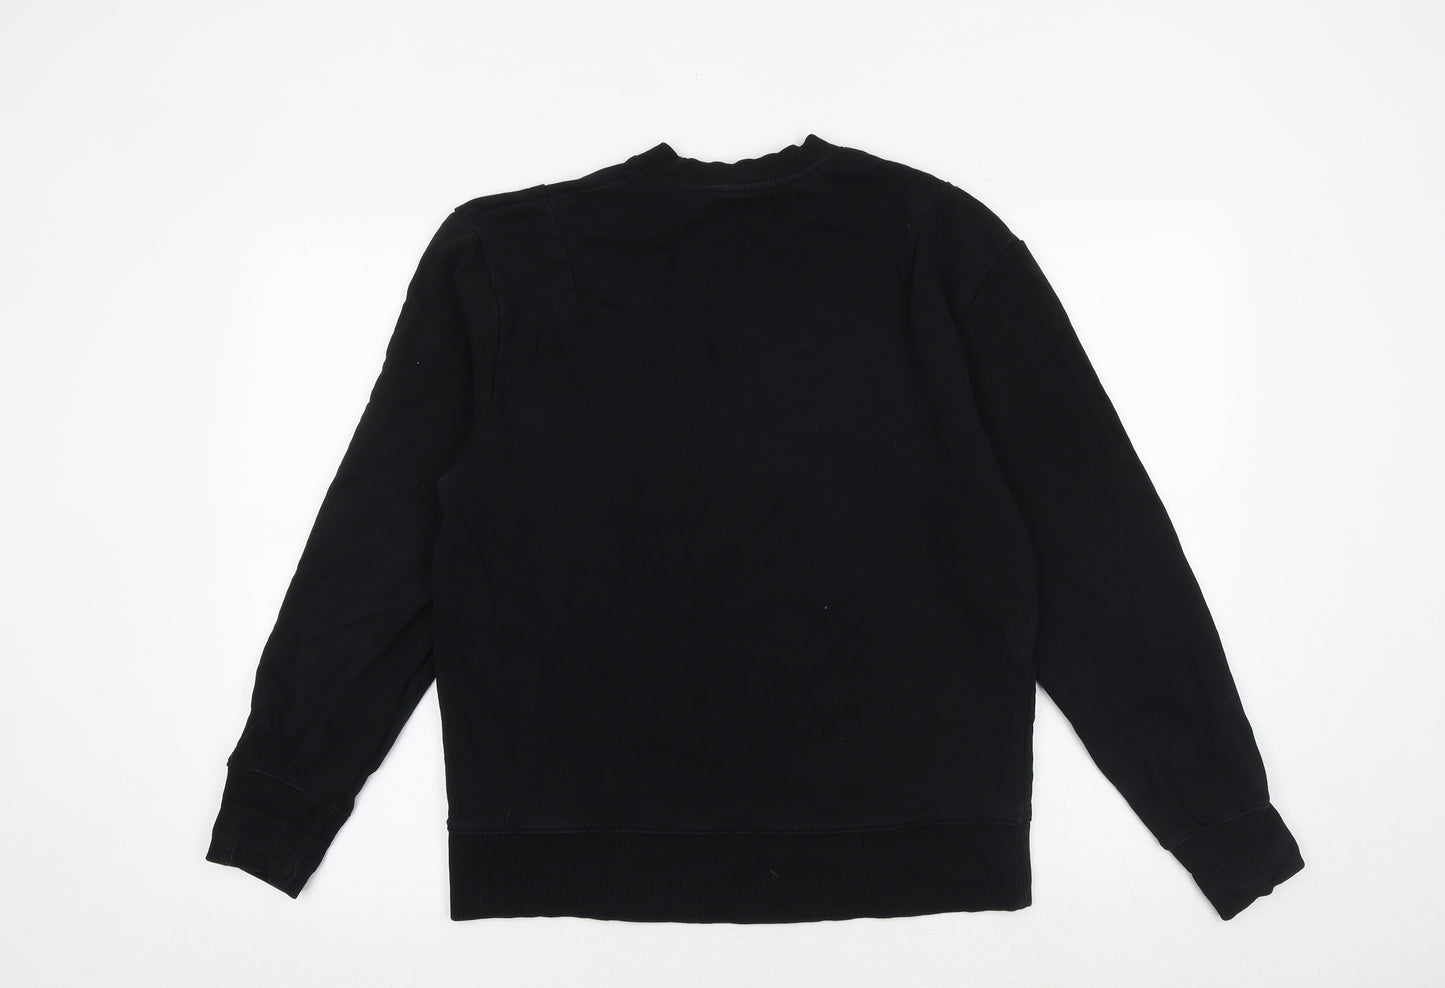 Topman Mens Black Cotton Pullover Sweatshirt Size XS